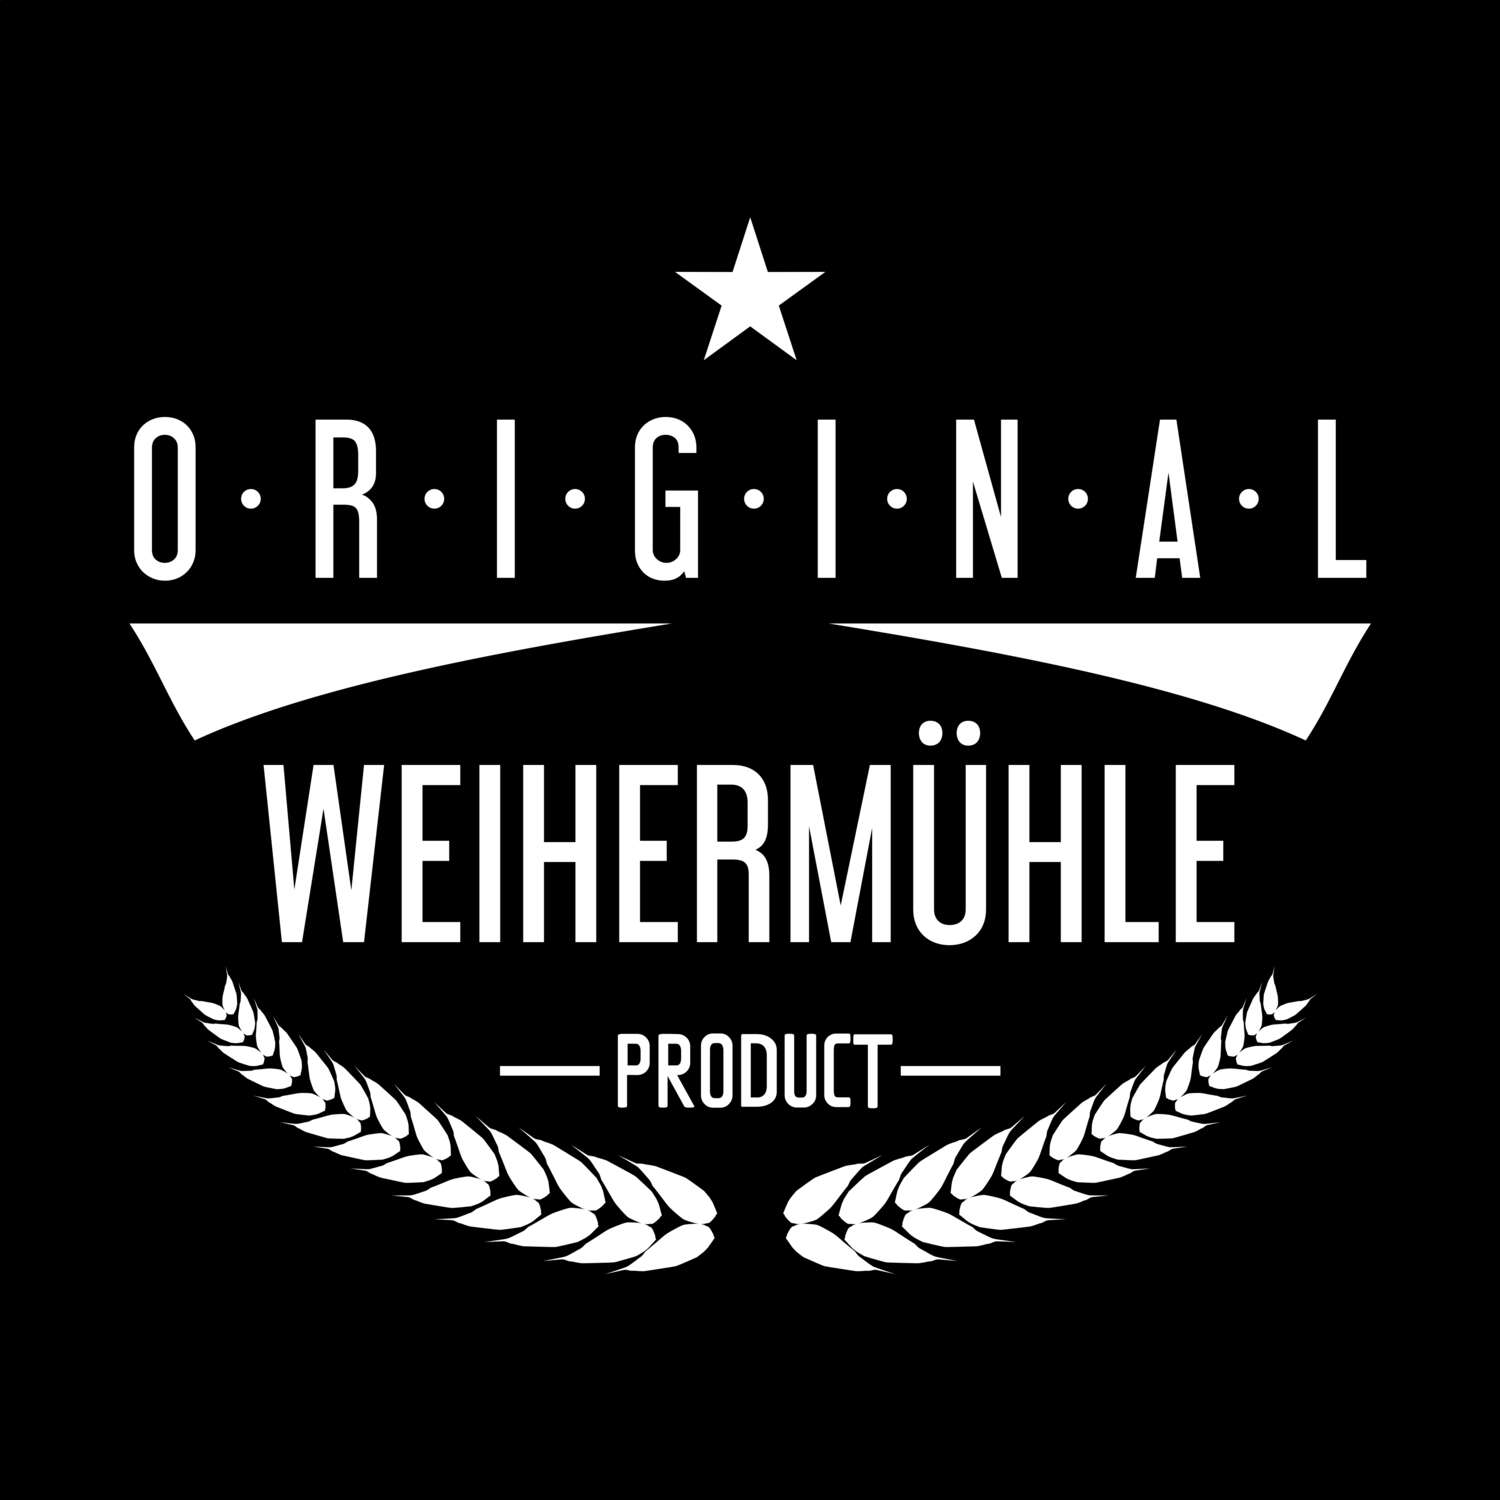 Weihermühle T-Shirt »Original Product«